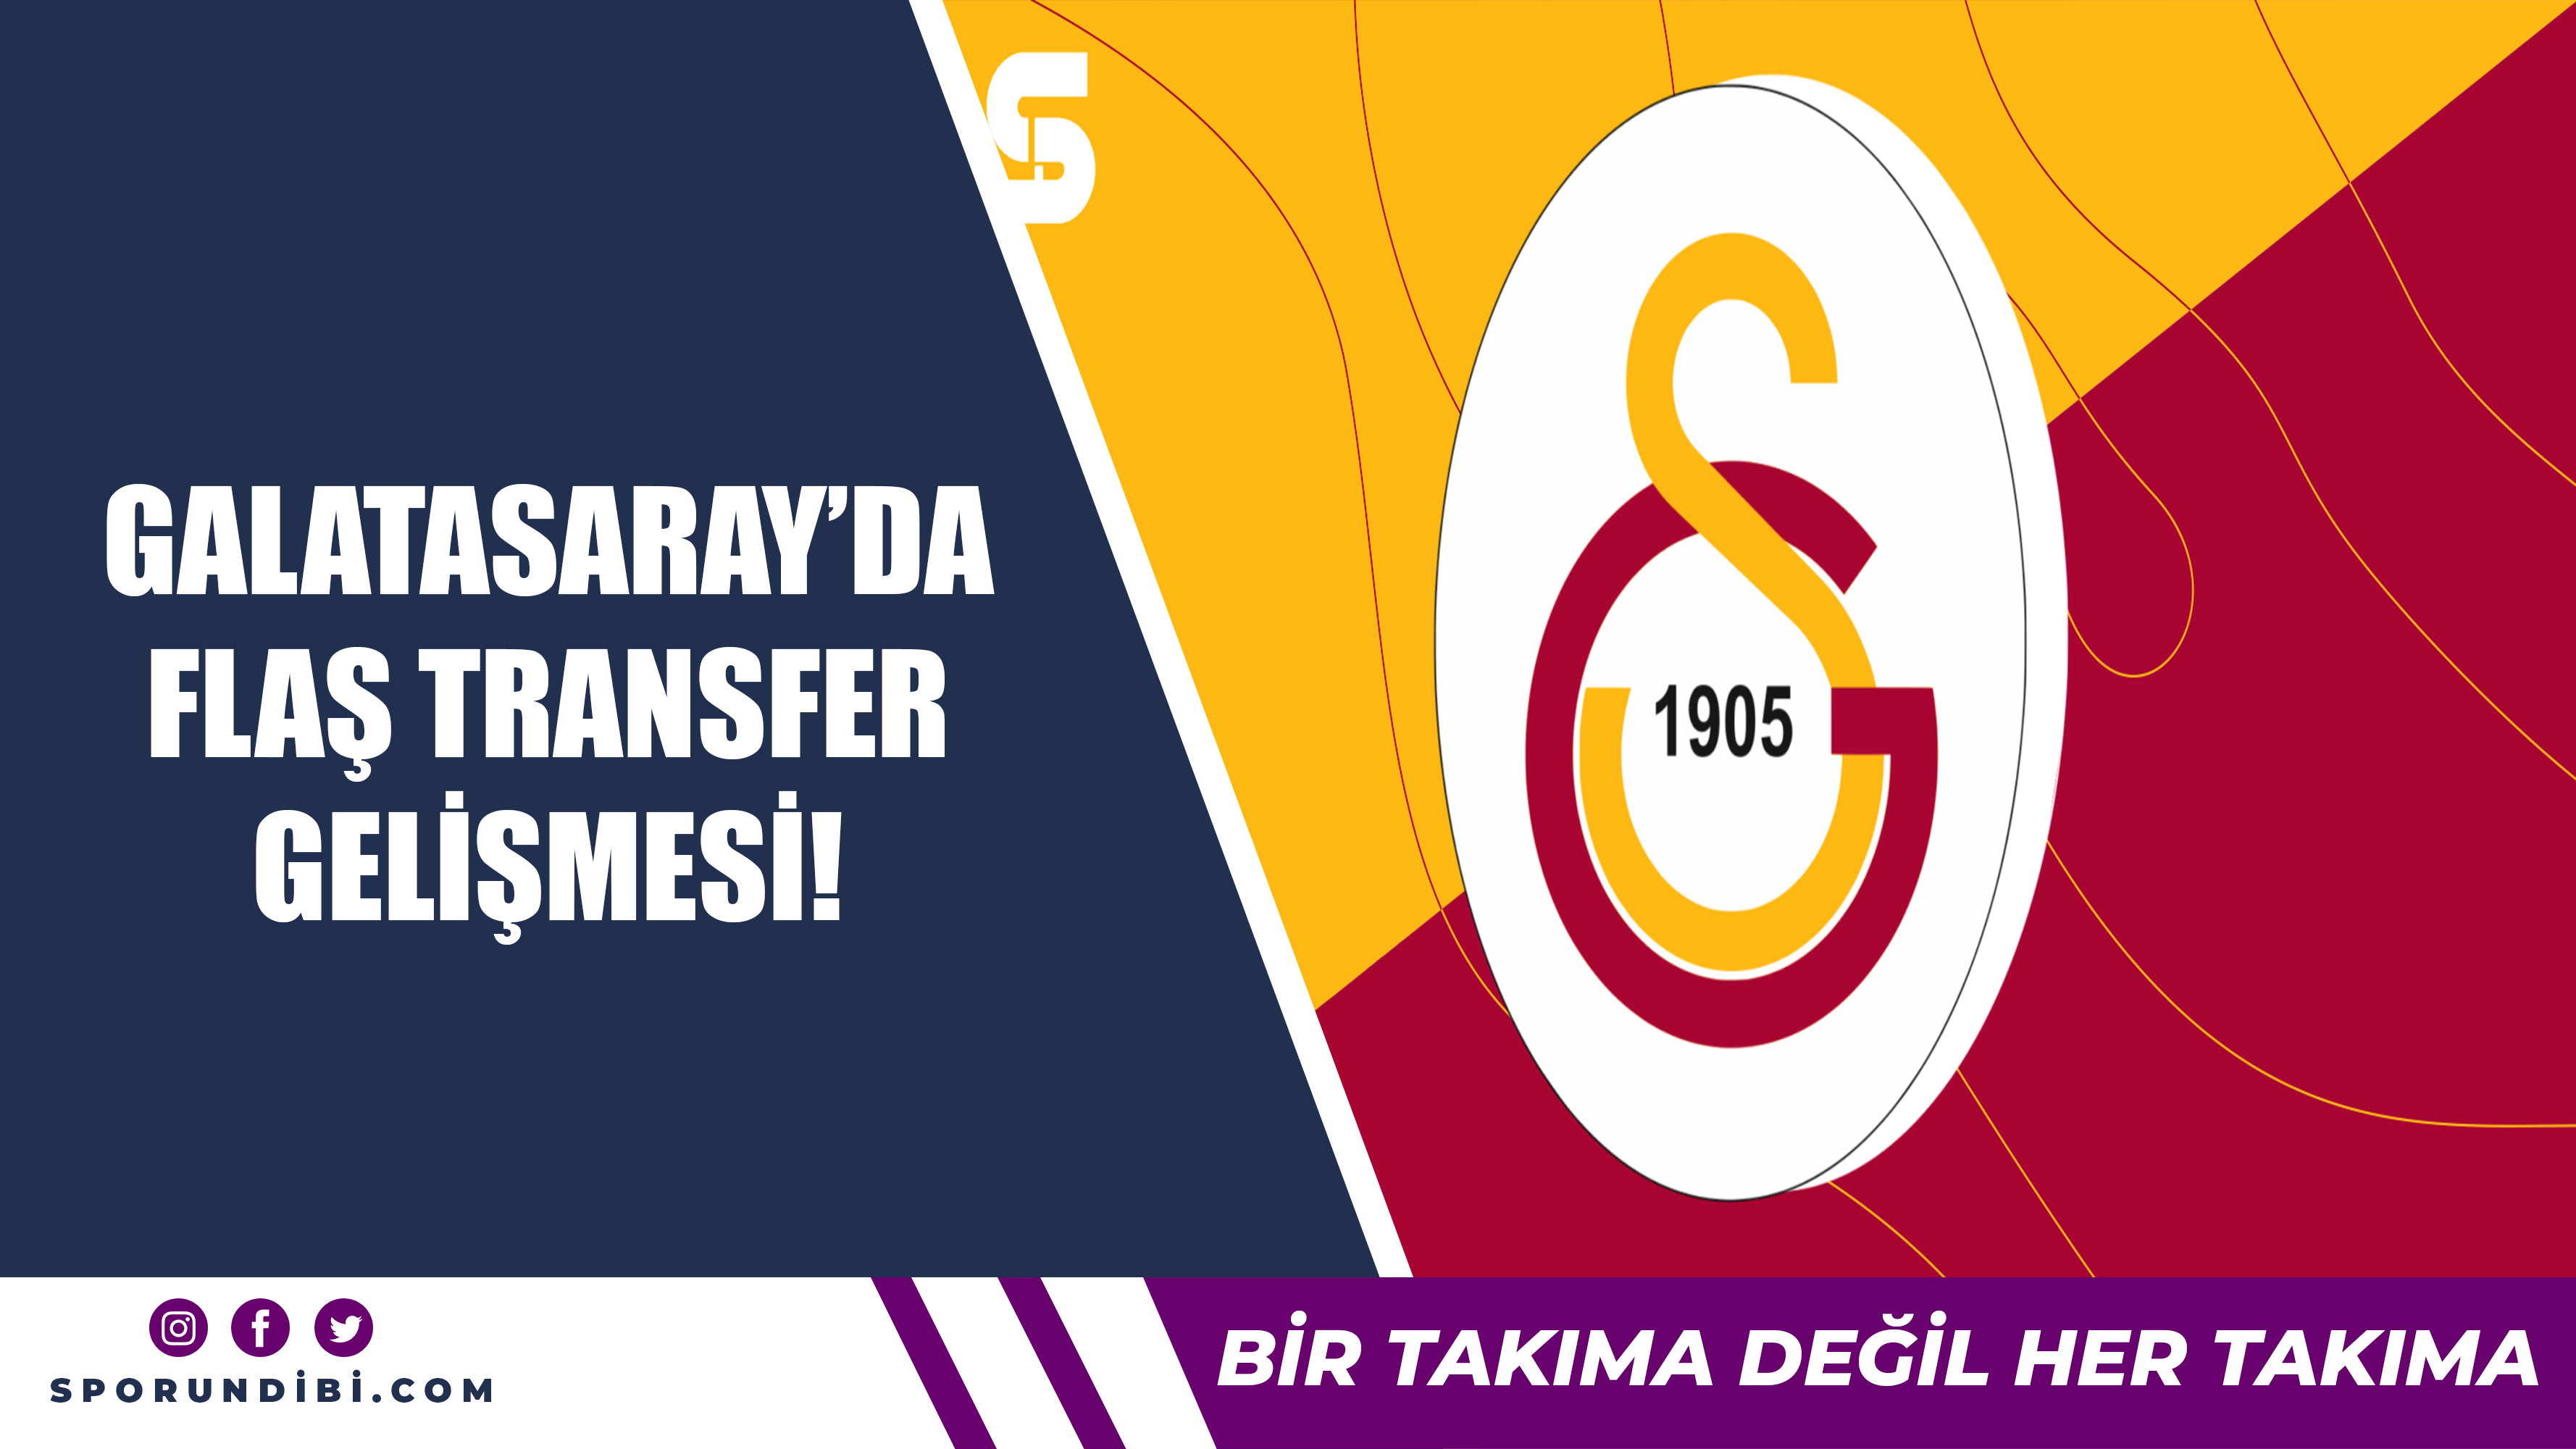 Galatasaray'da flaş transfer gelişmesi!